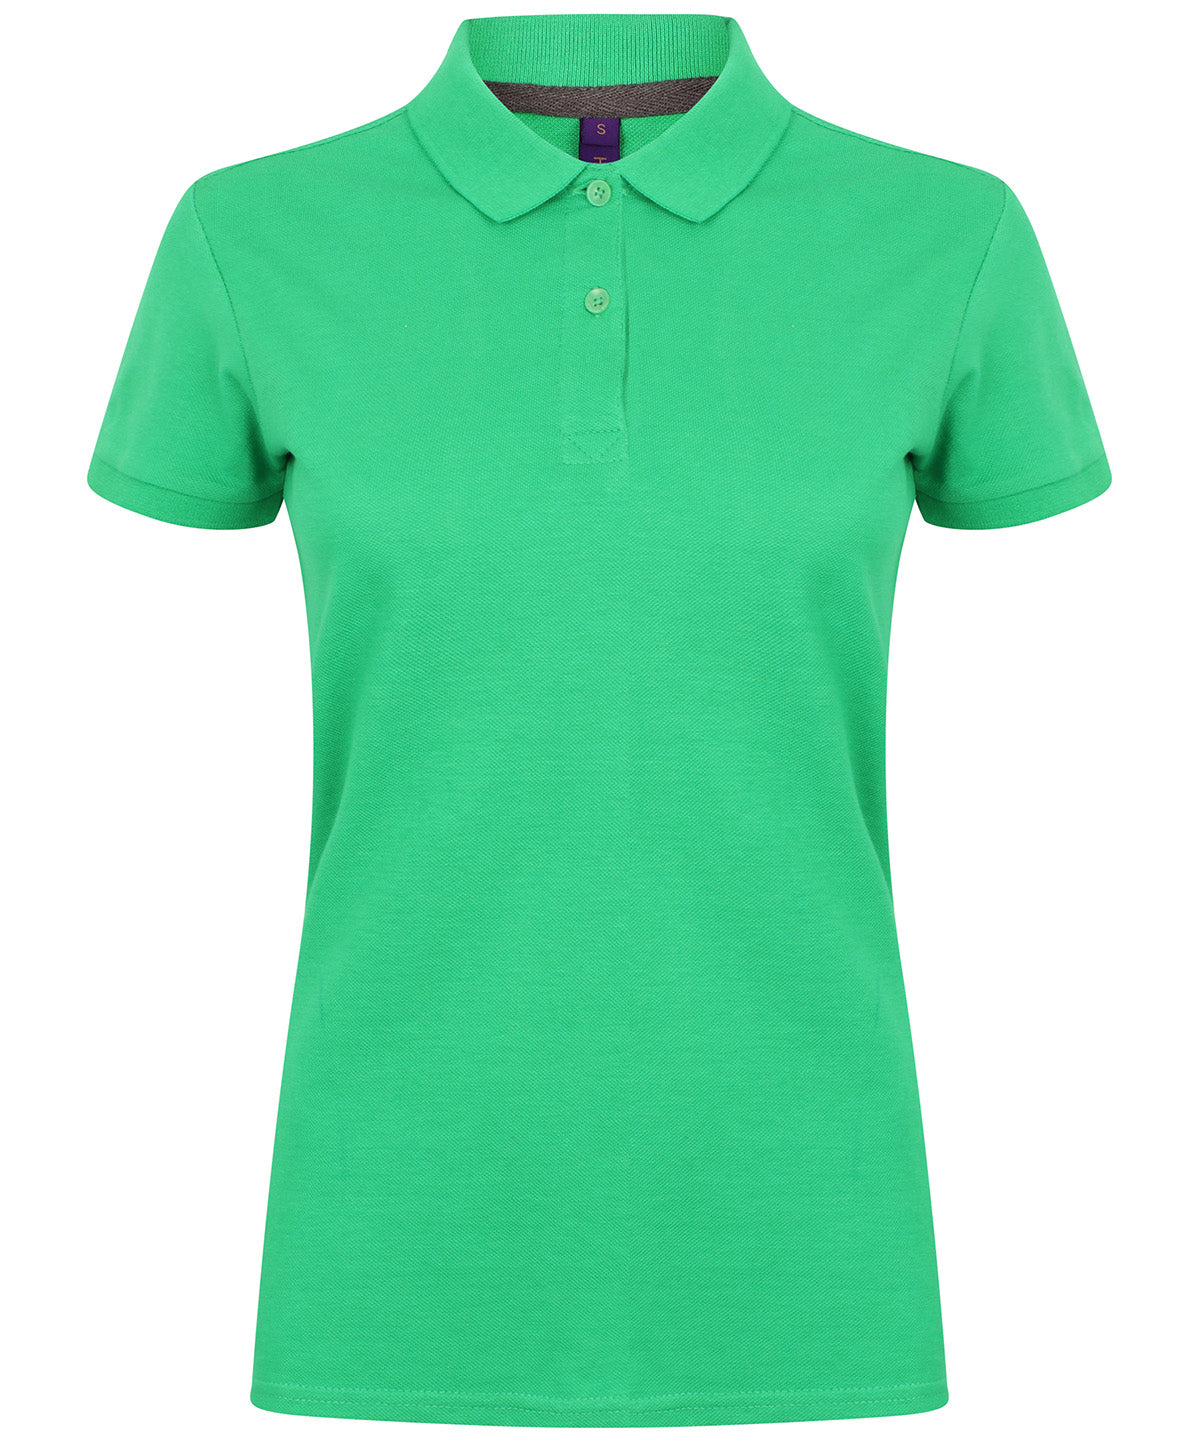 Personalised Polo Shirts - Black Henbury Women's micro-fine piqué polo shirt